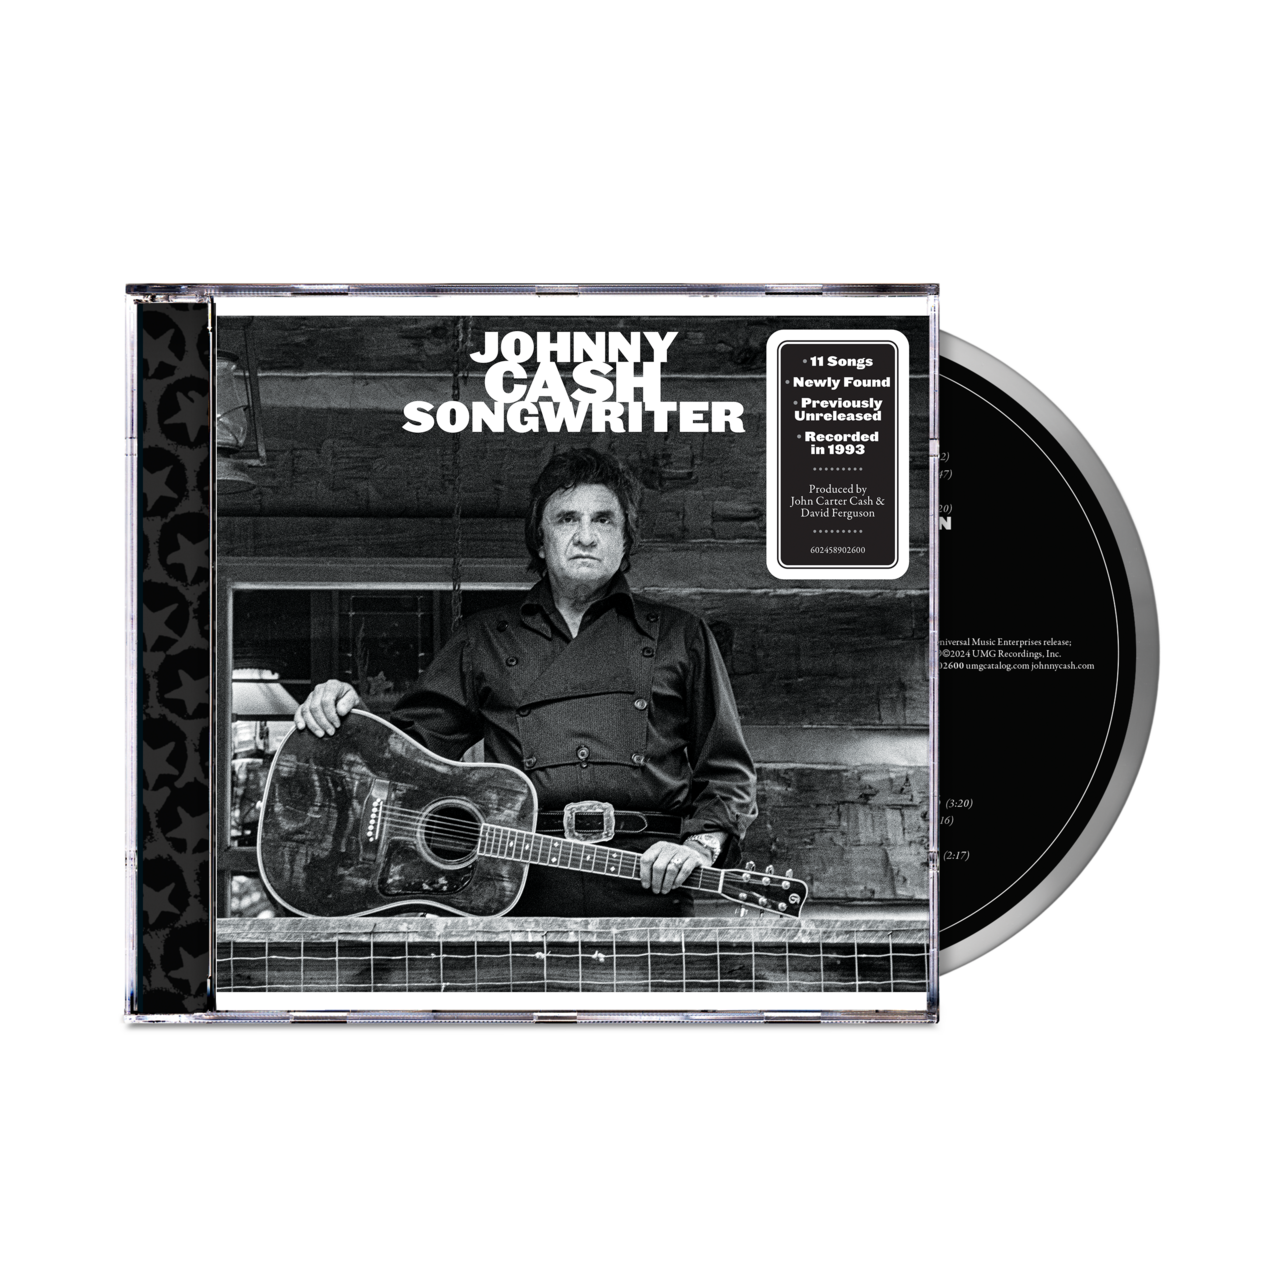 Johnny Cash - Songwriter Standard CD